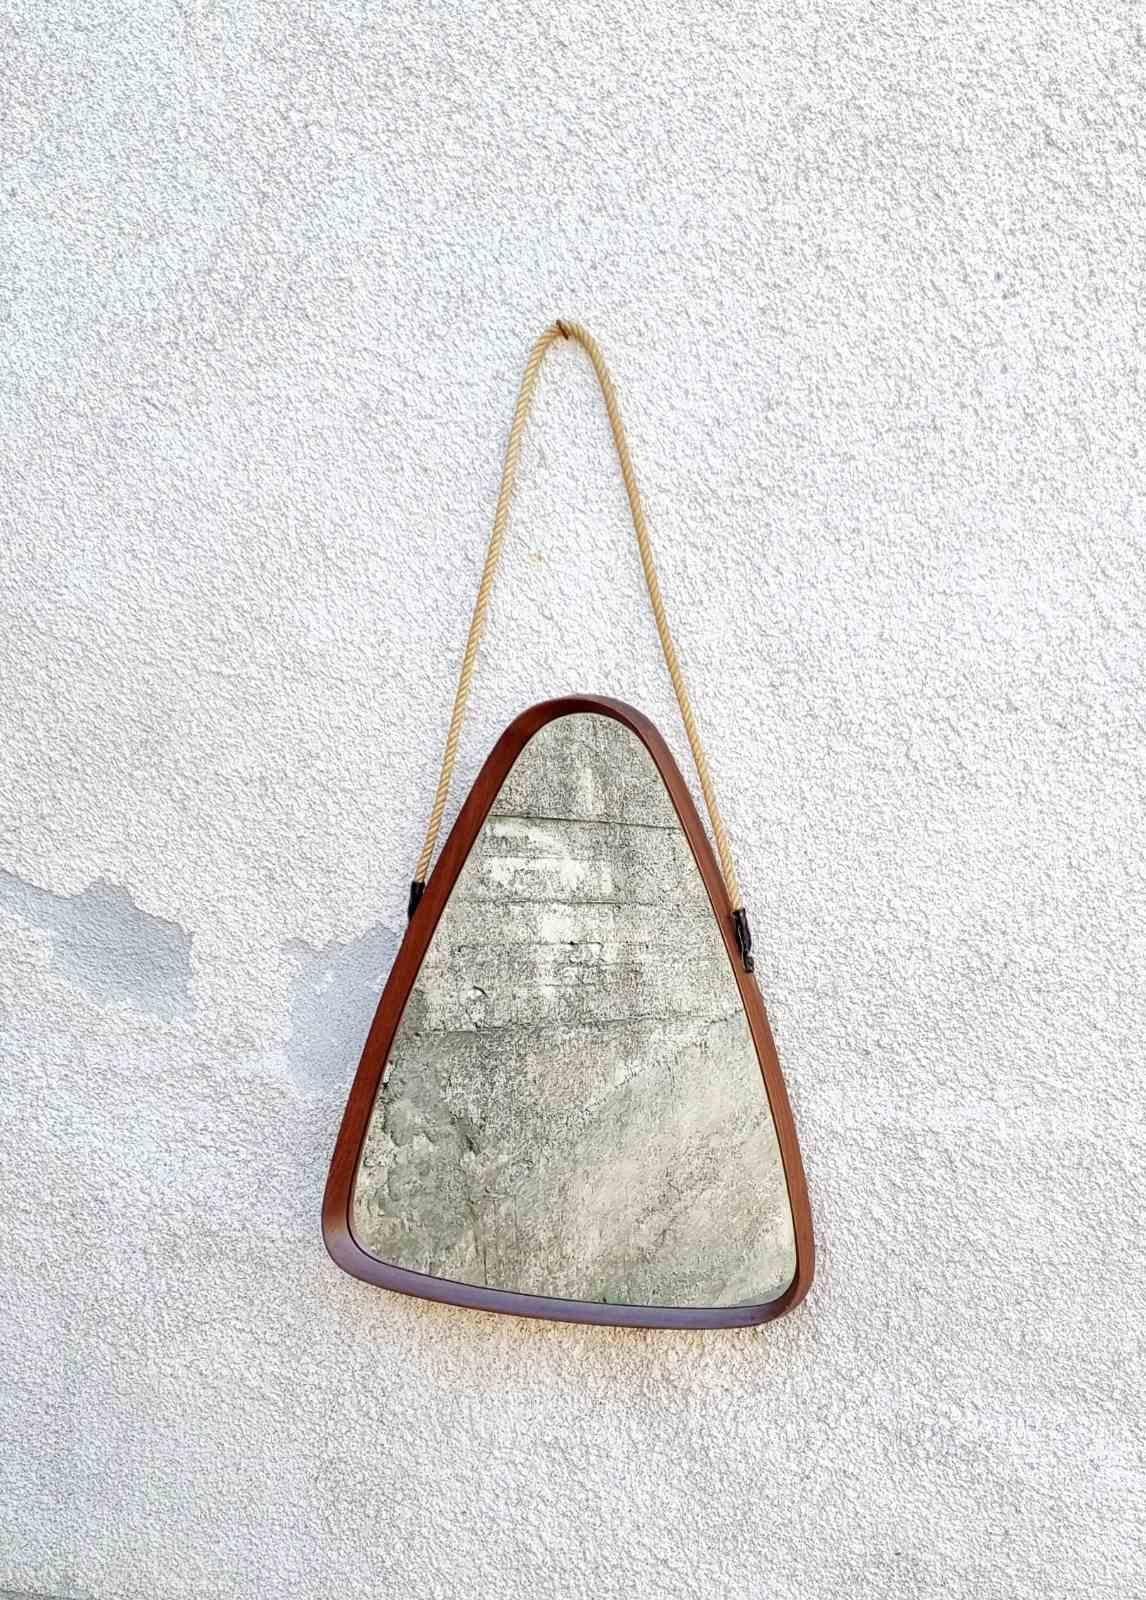 Mid-20th Century Italian Modern Triangular Mirror by Franco Campo and Carlo Graffi, Italy 60s For Sale